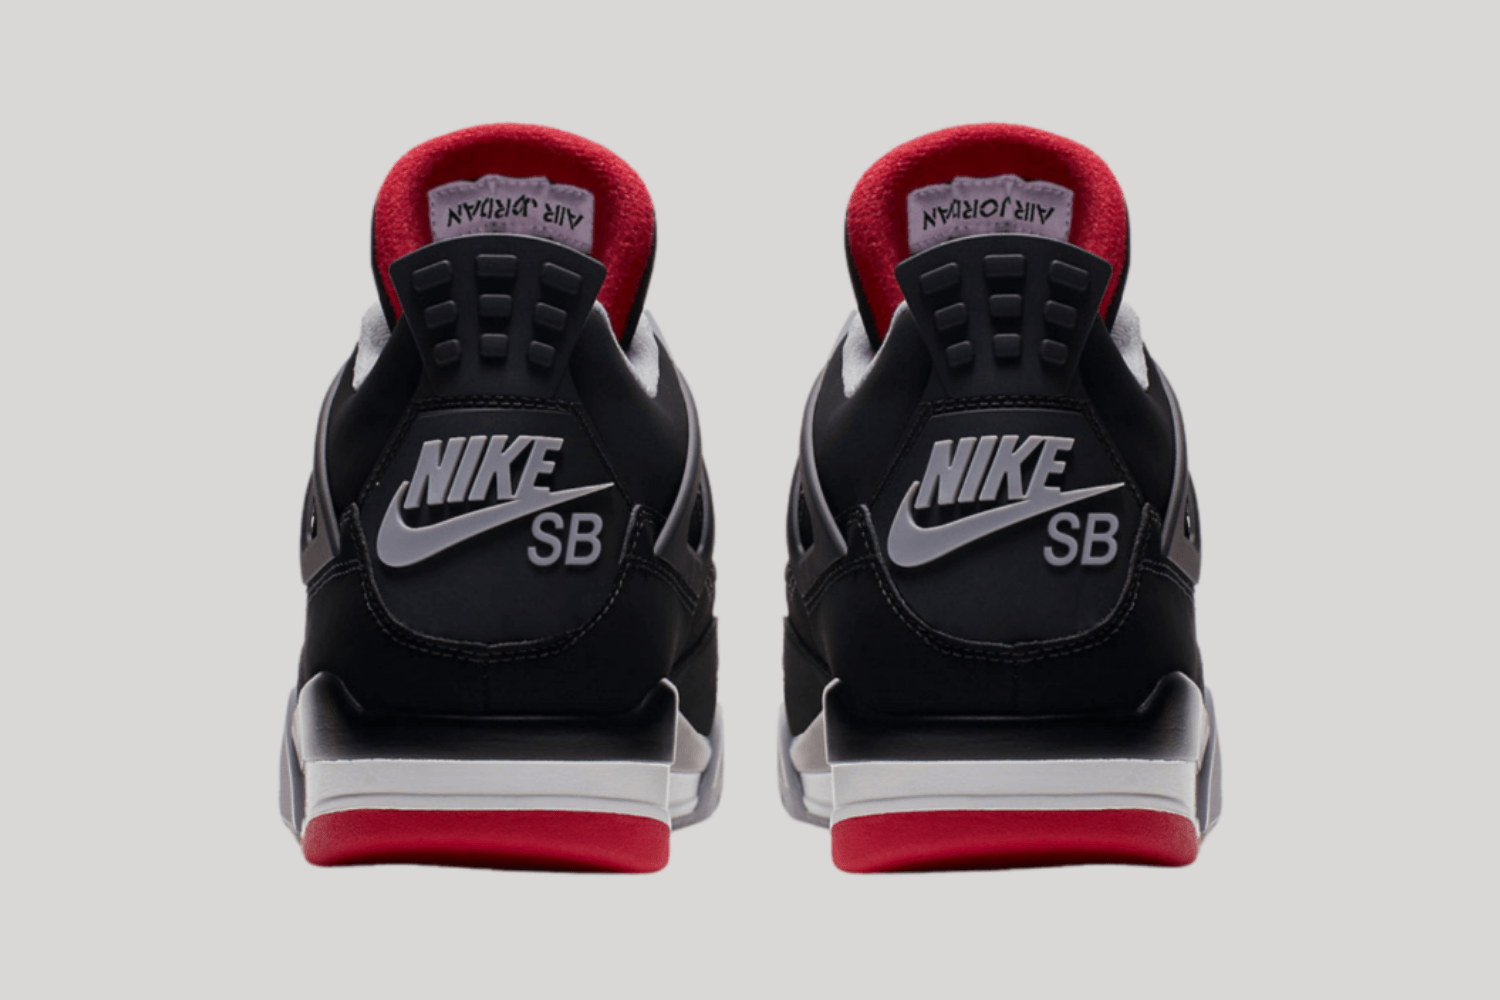 Erwartet uns ein Nike SB x Air Jordan 4?